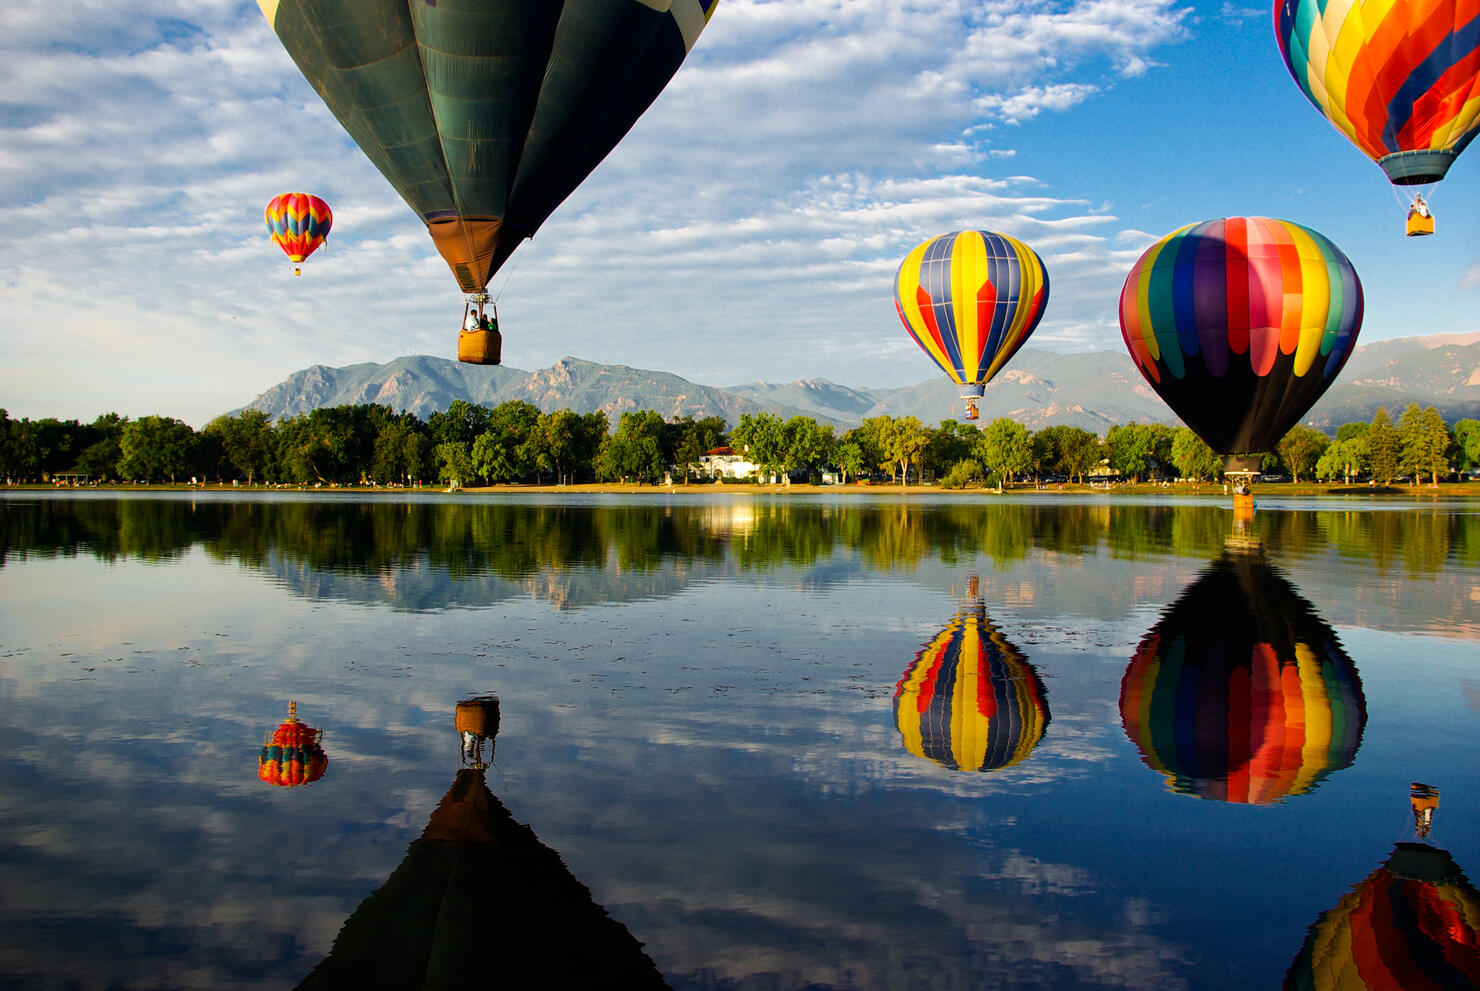 Cheyenne Mountain and Hot Air Balloons